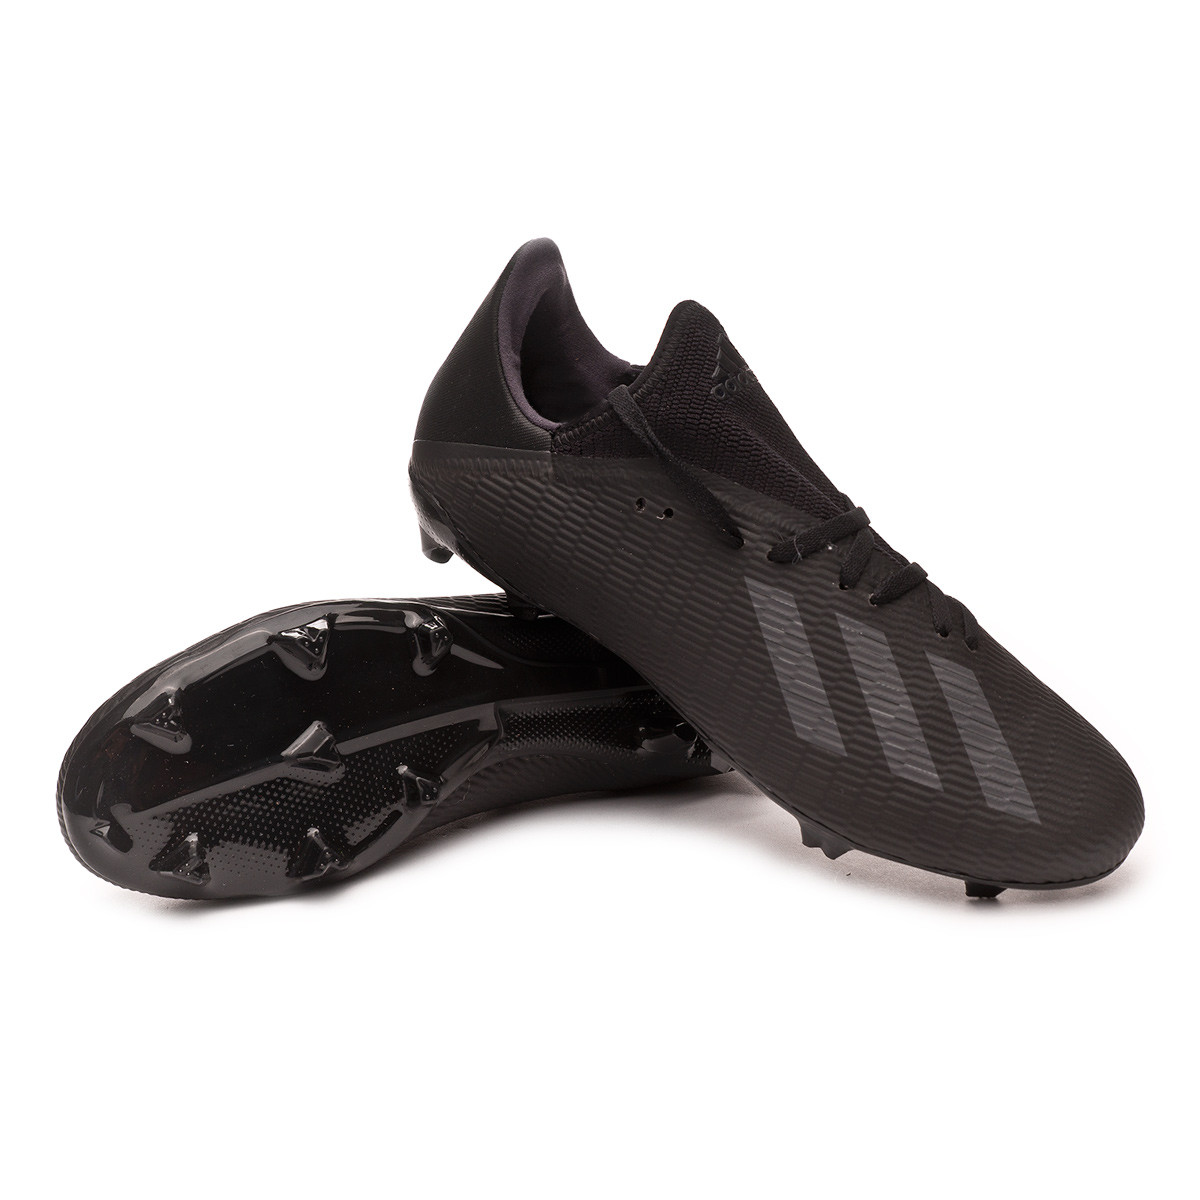 Bota de fútbol adidas X 19.3 FG Core black-Utility black-Silver metallic -  Tienda de fútbol Fútbol Emotion